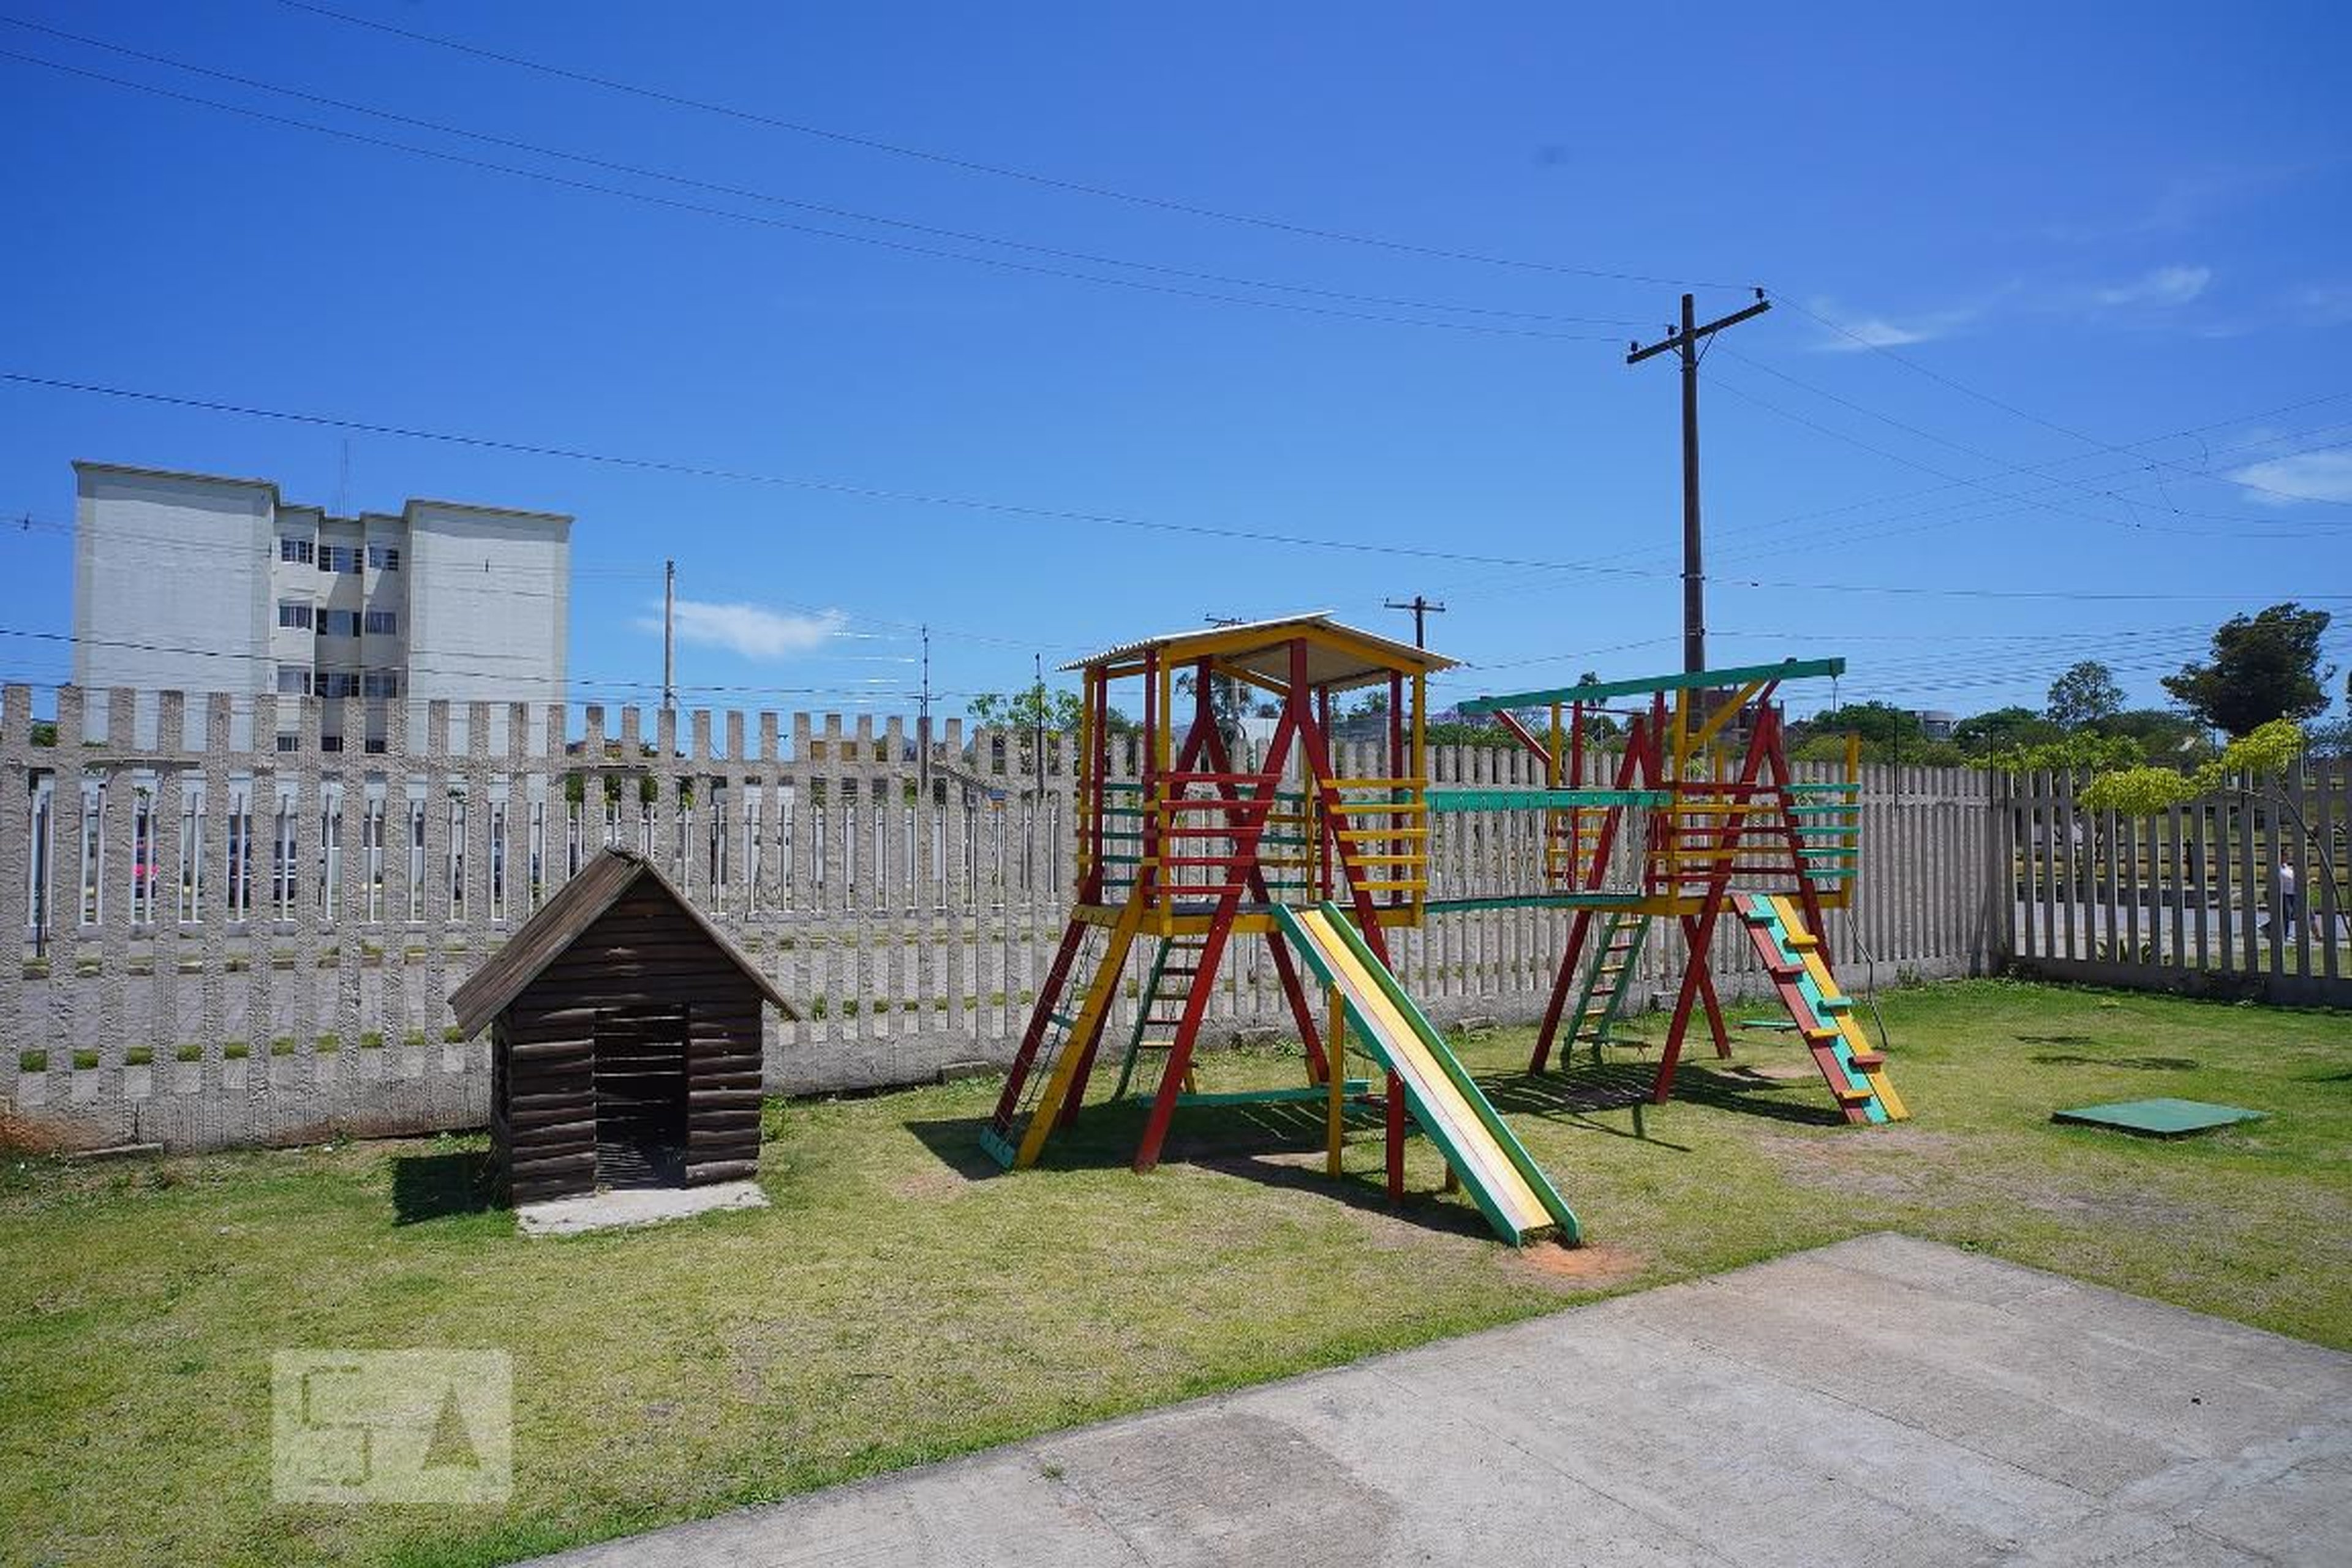 Área Comum - Playground